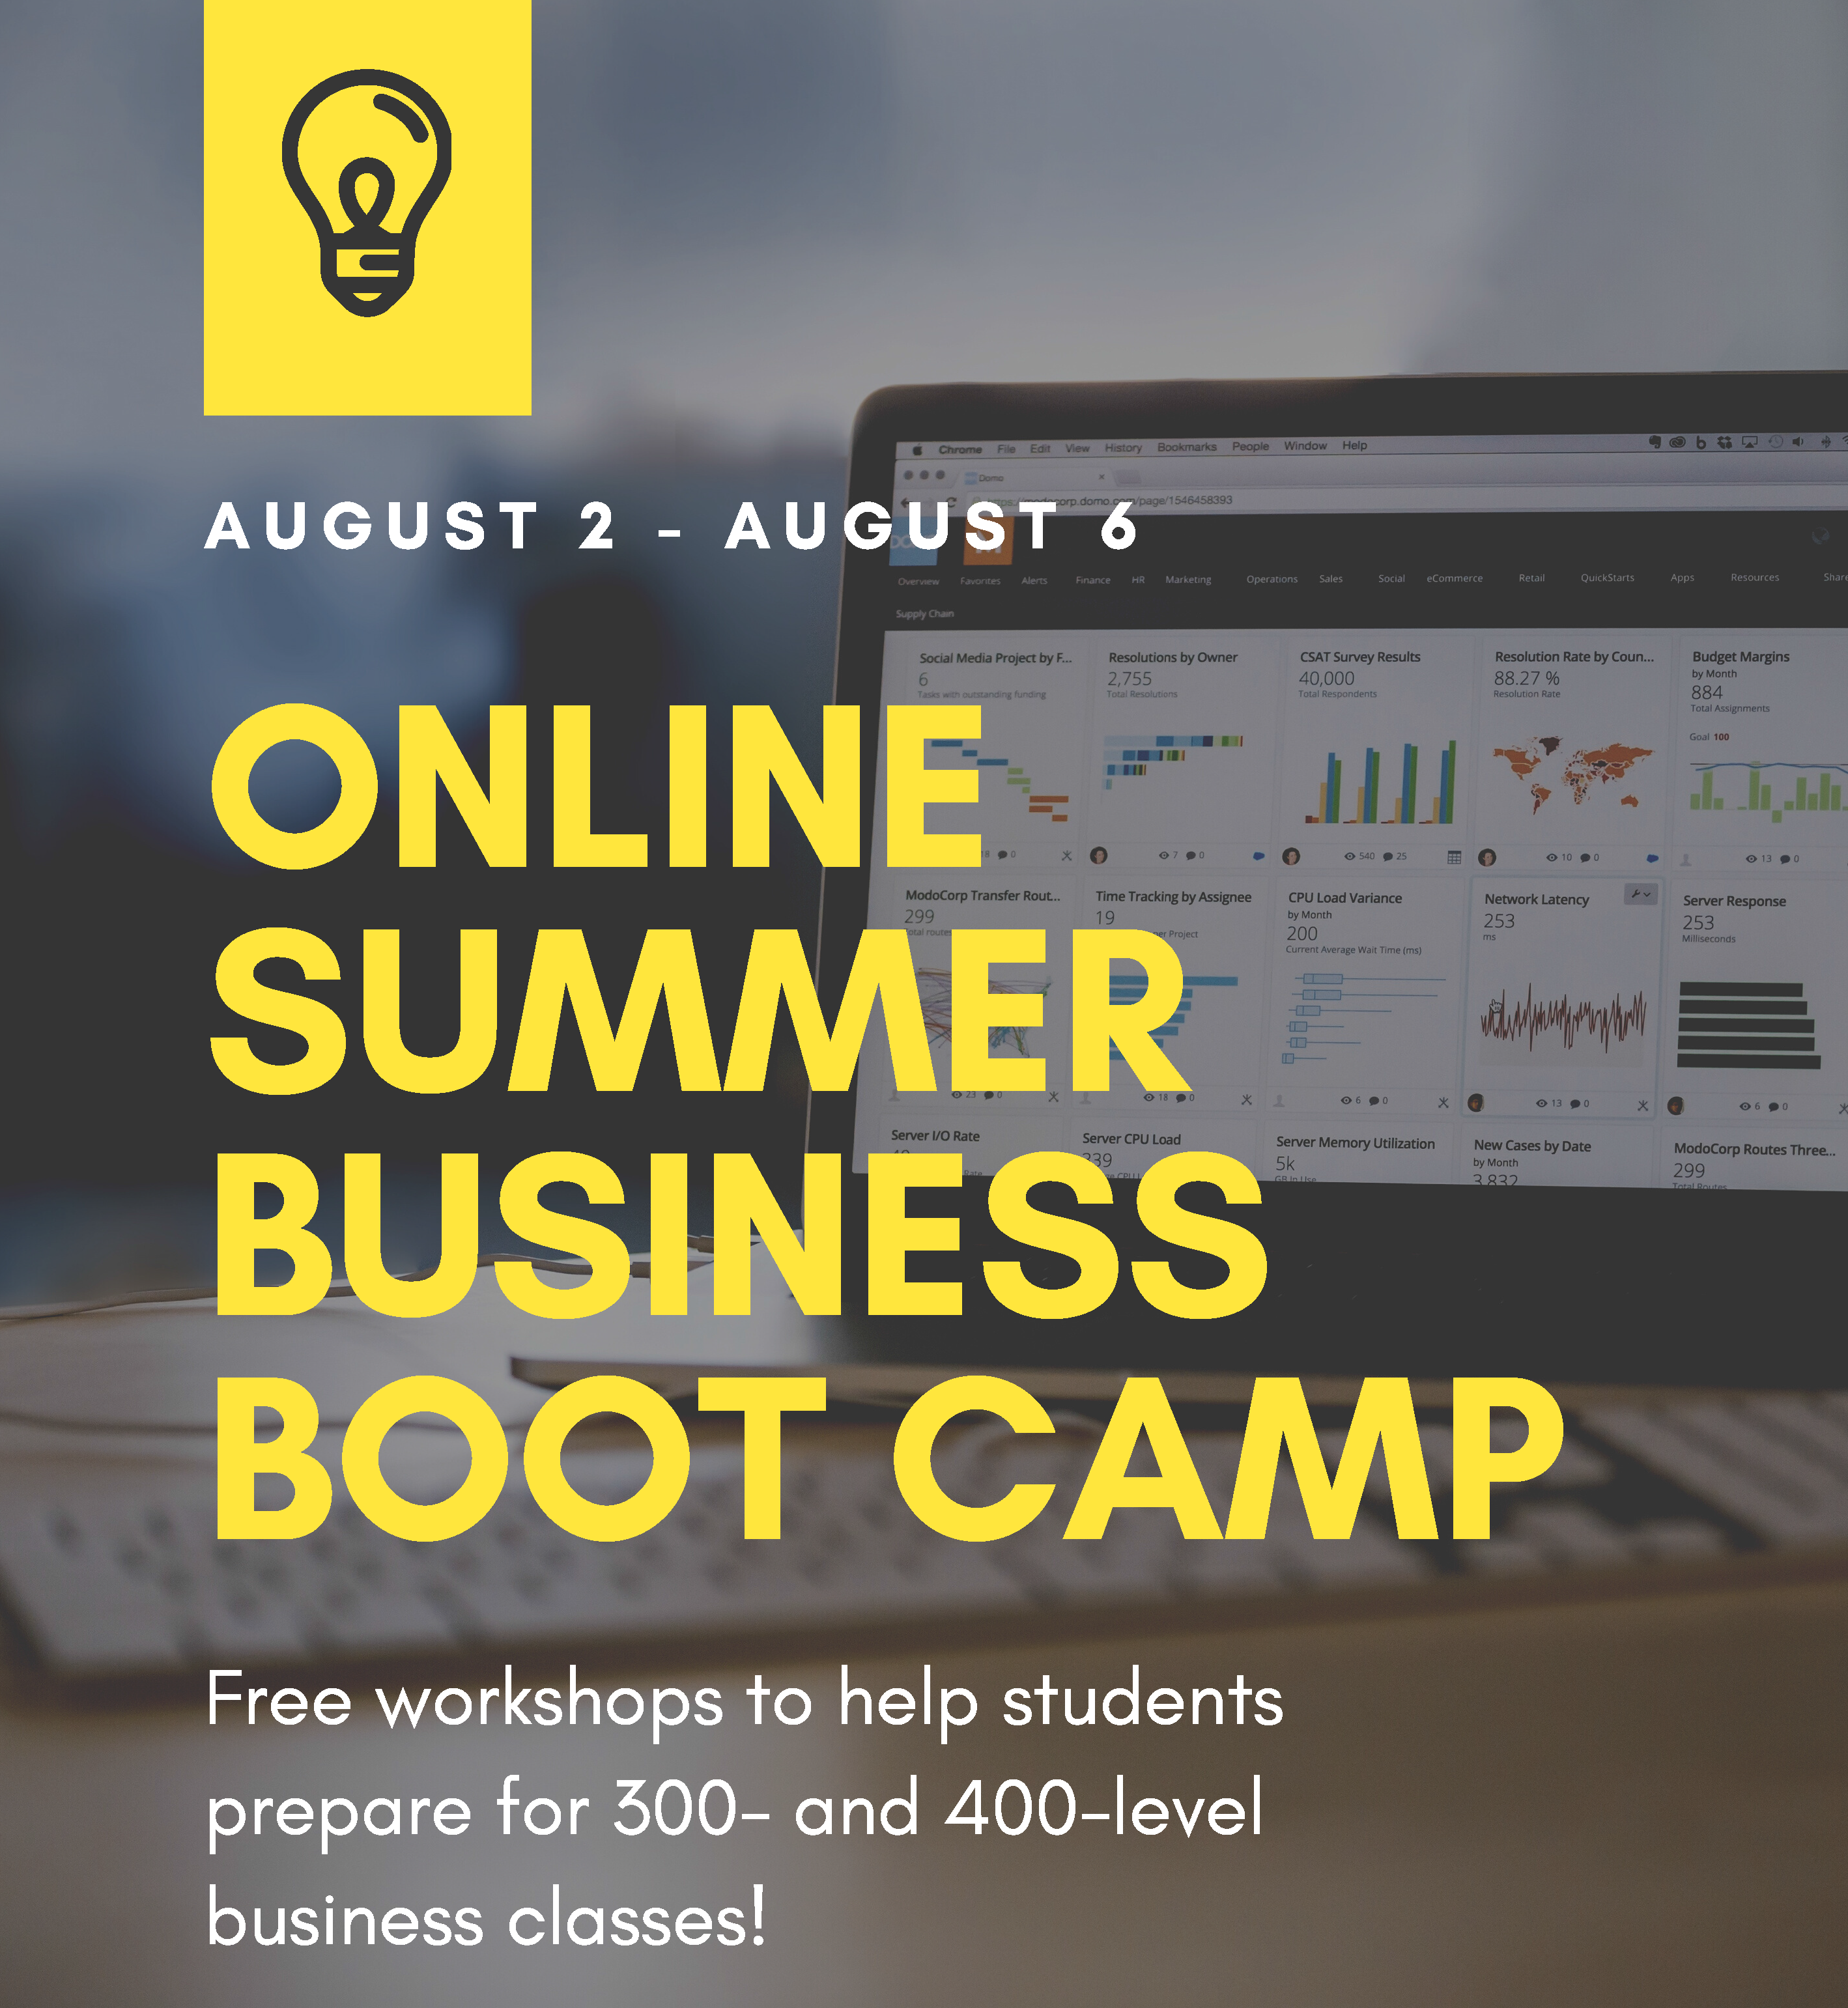 Online Summer Business Boot Camp Aug 2-6